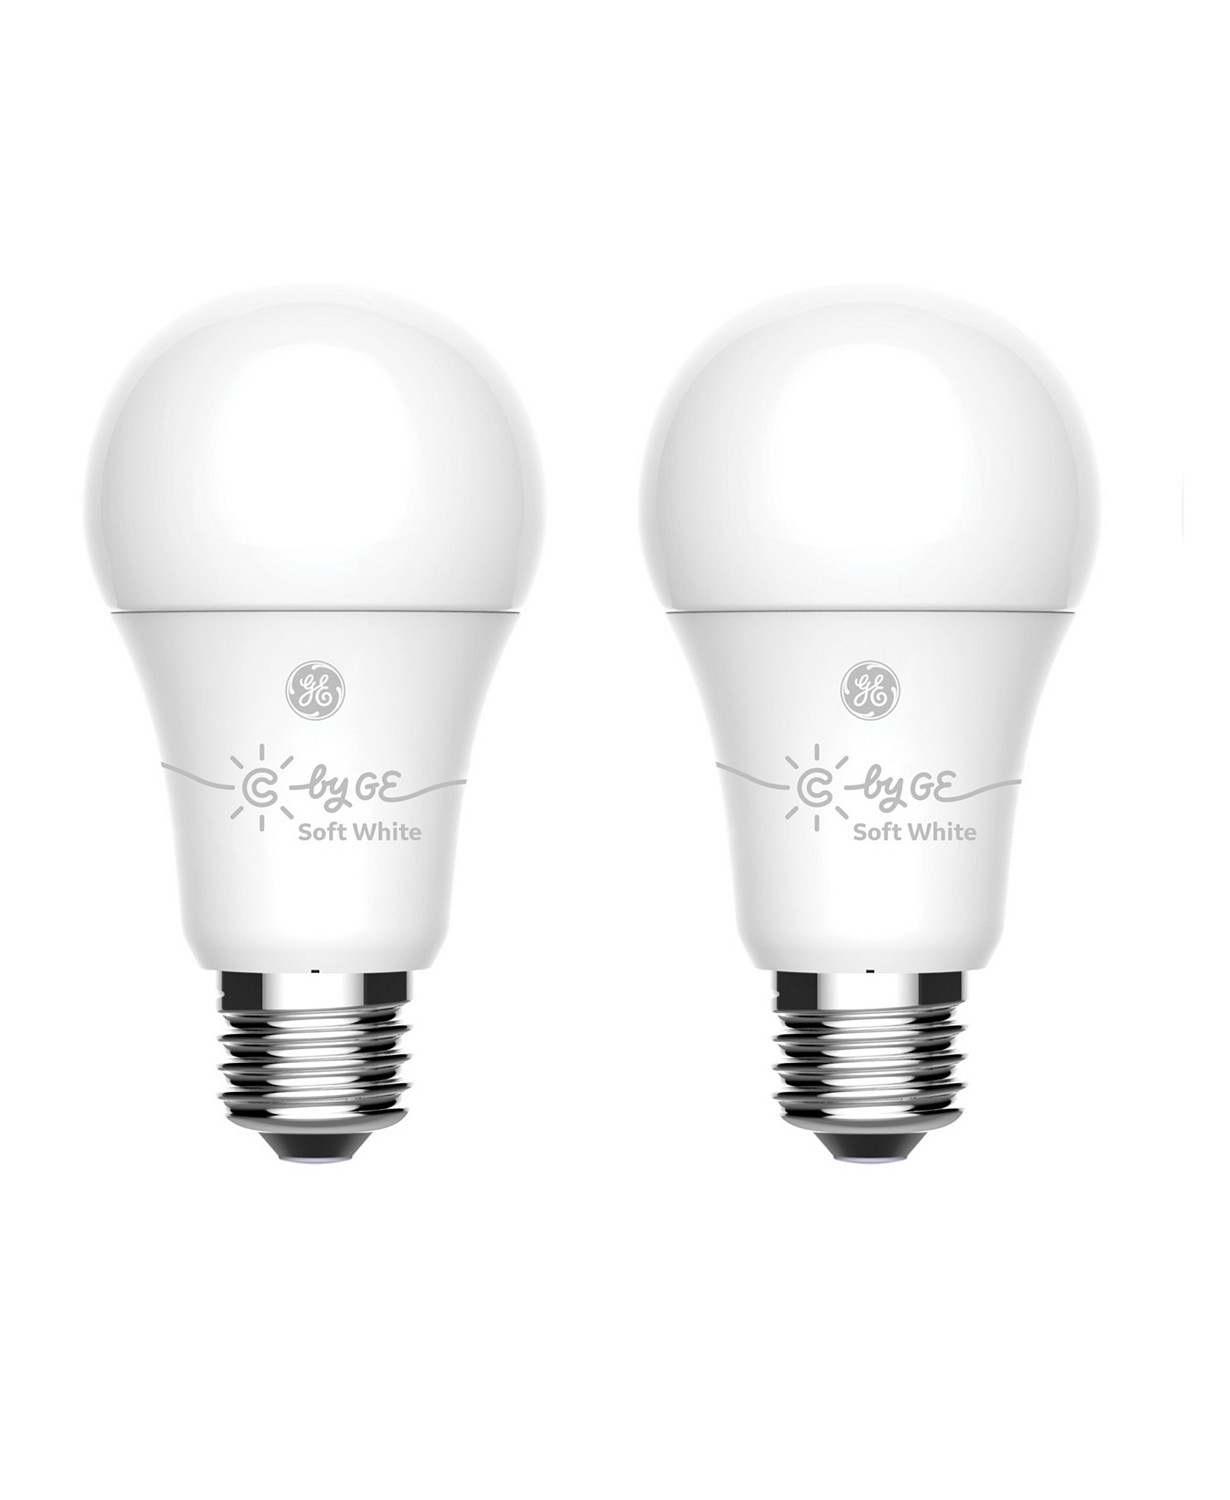  Soft White Smart Bulbs (2 ...